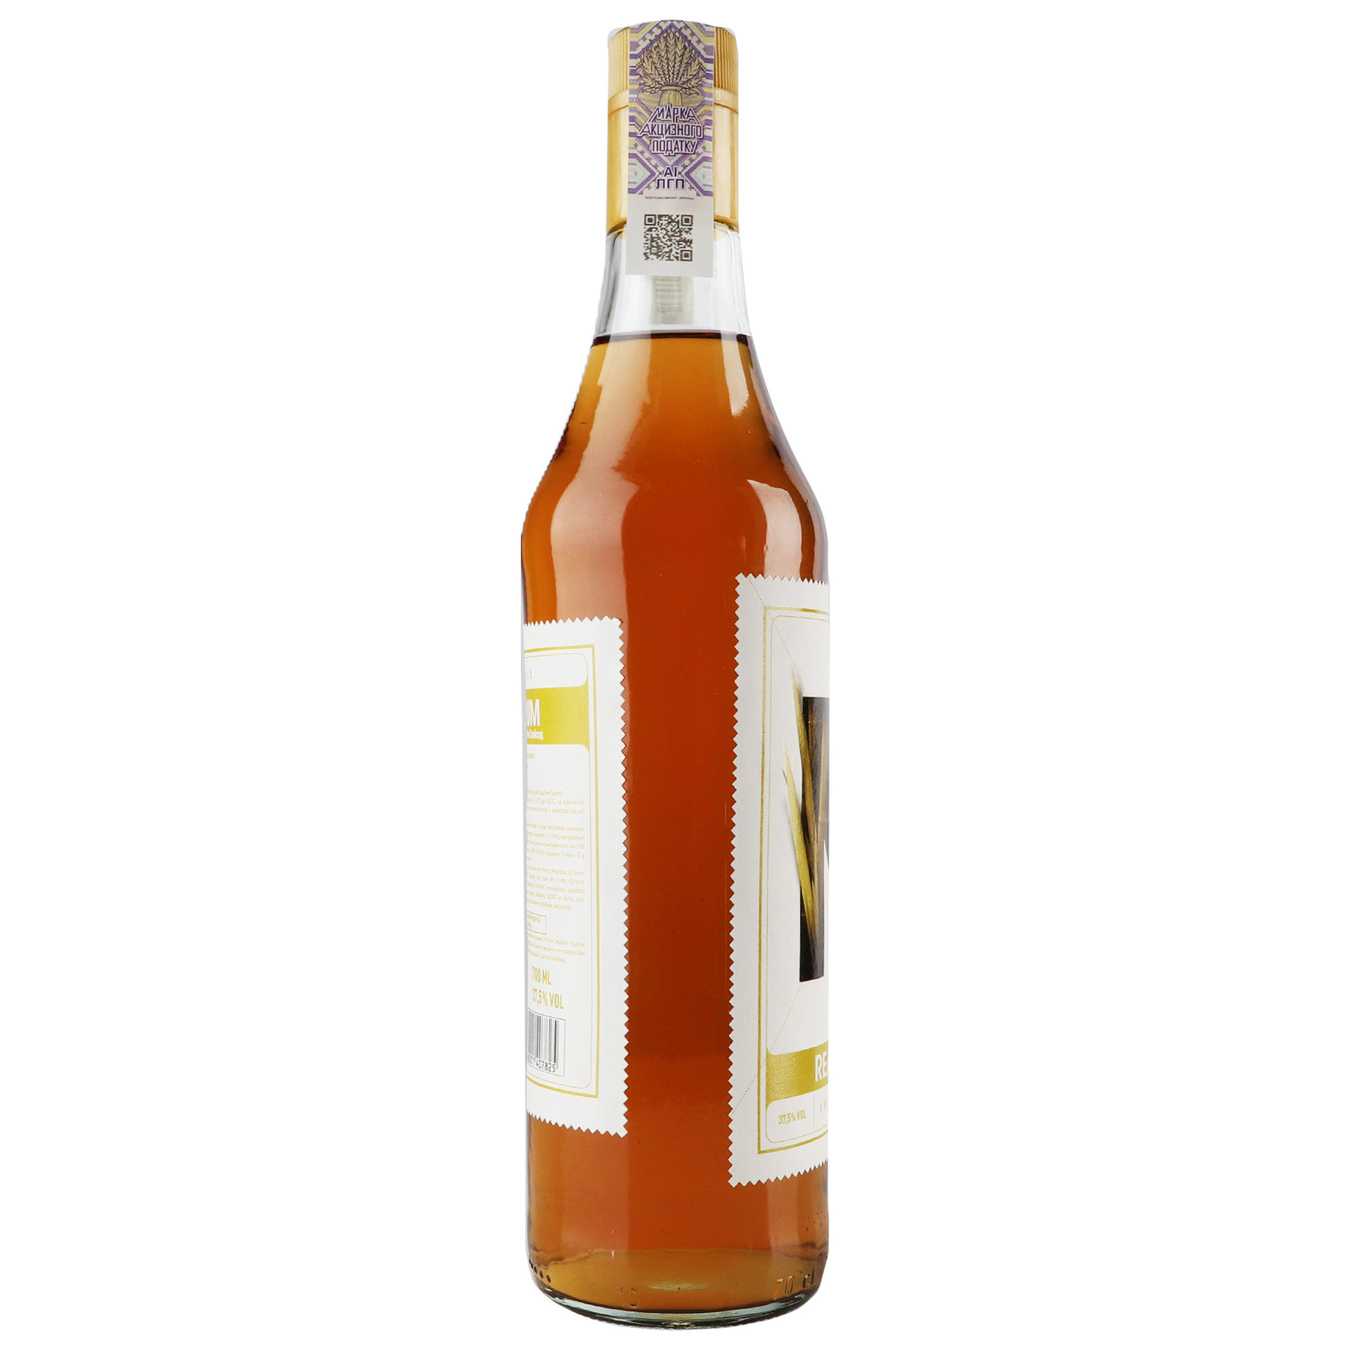 Rum Viejo Corsario Real Rum Spiced 37.5% 0.7l 3